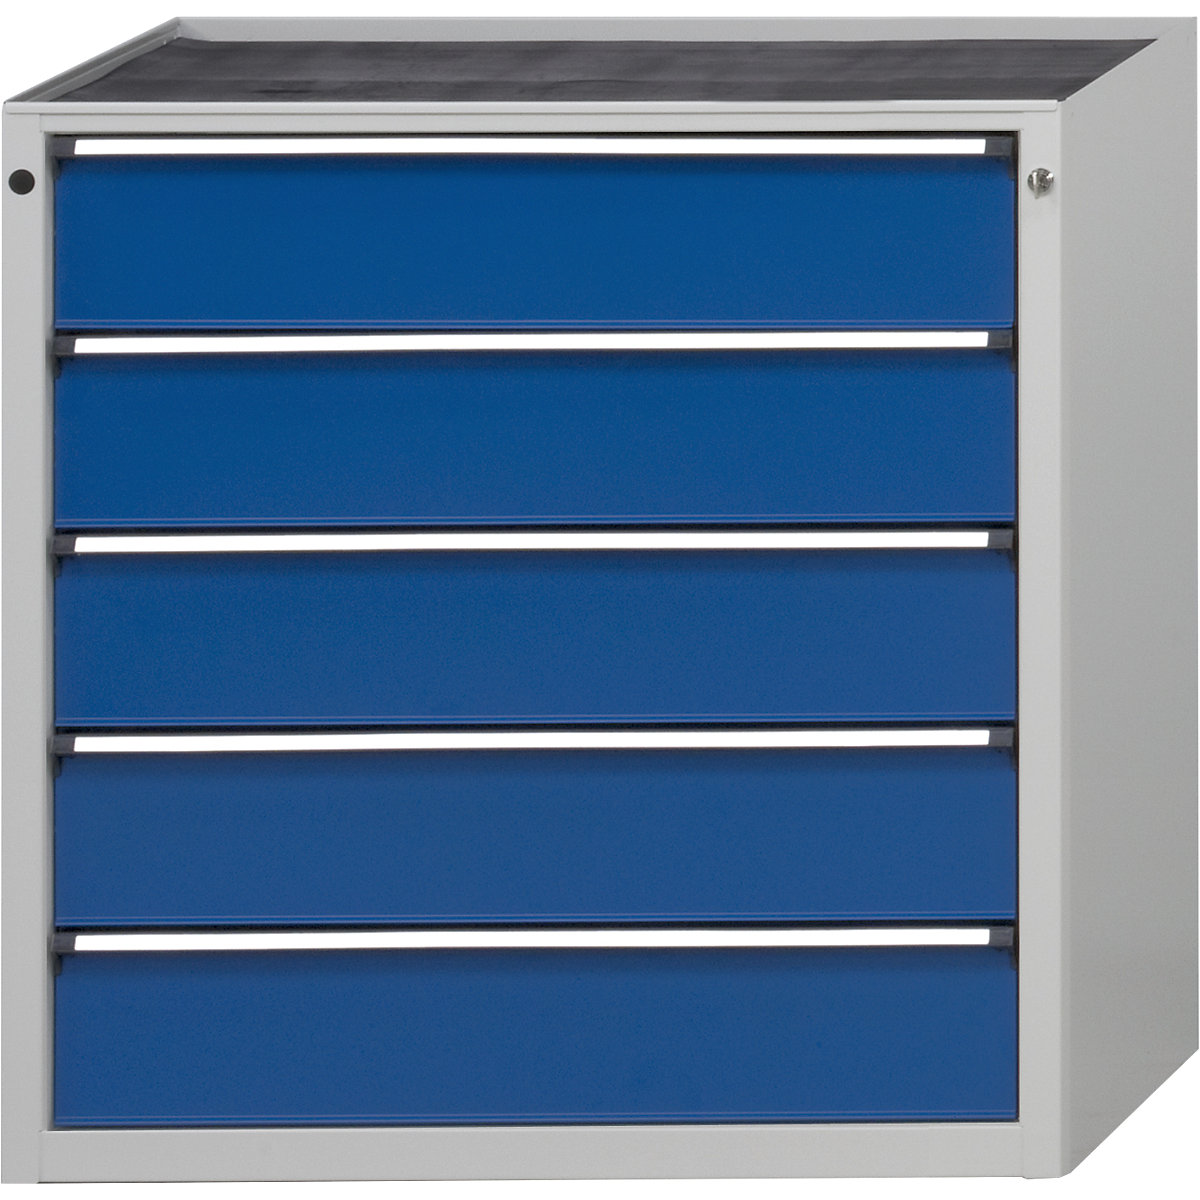 ANKE – Armoire à tiroirs, l x p 910 x 675 mm, 5 tiroirs, hauteur 980 mm, façade bleu gentiane